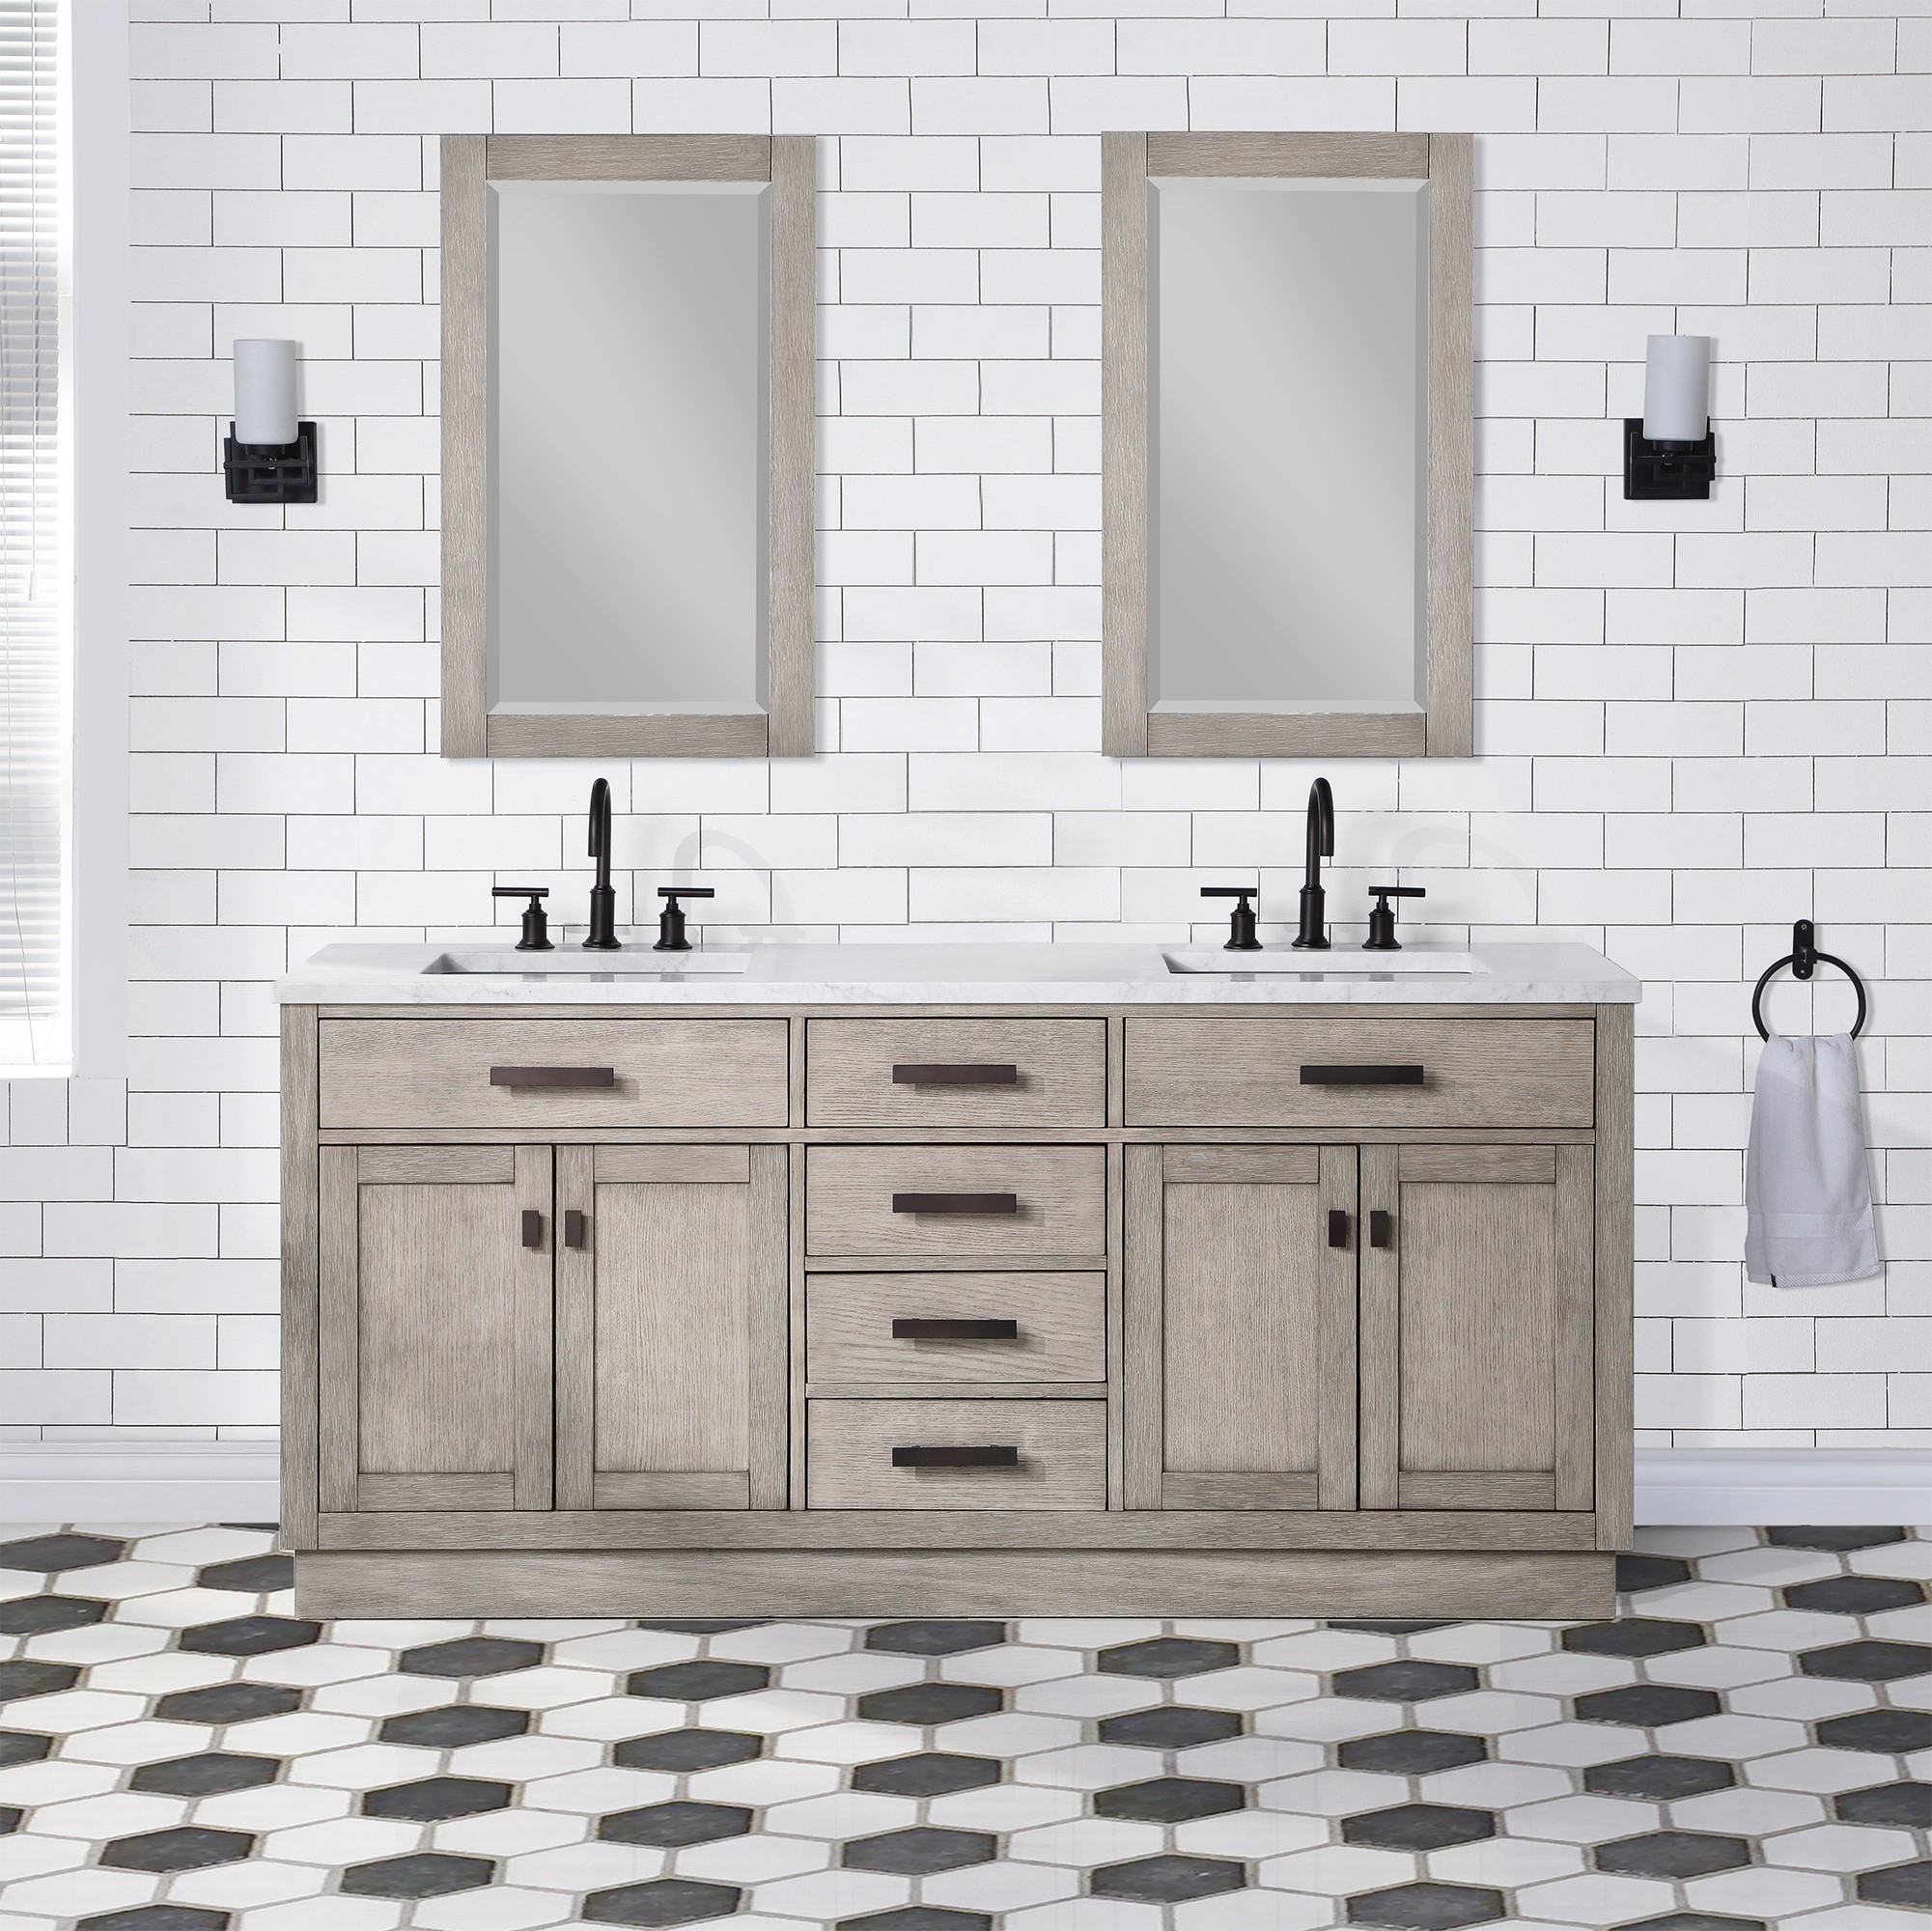 72 Inch Double Bathroom Vanity, Mirror Size For 72 Inch Double Vanity